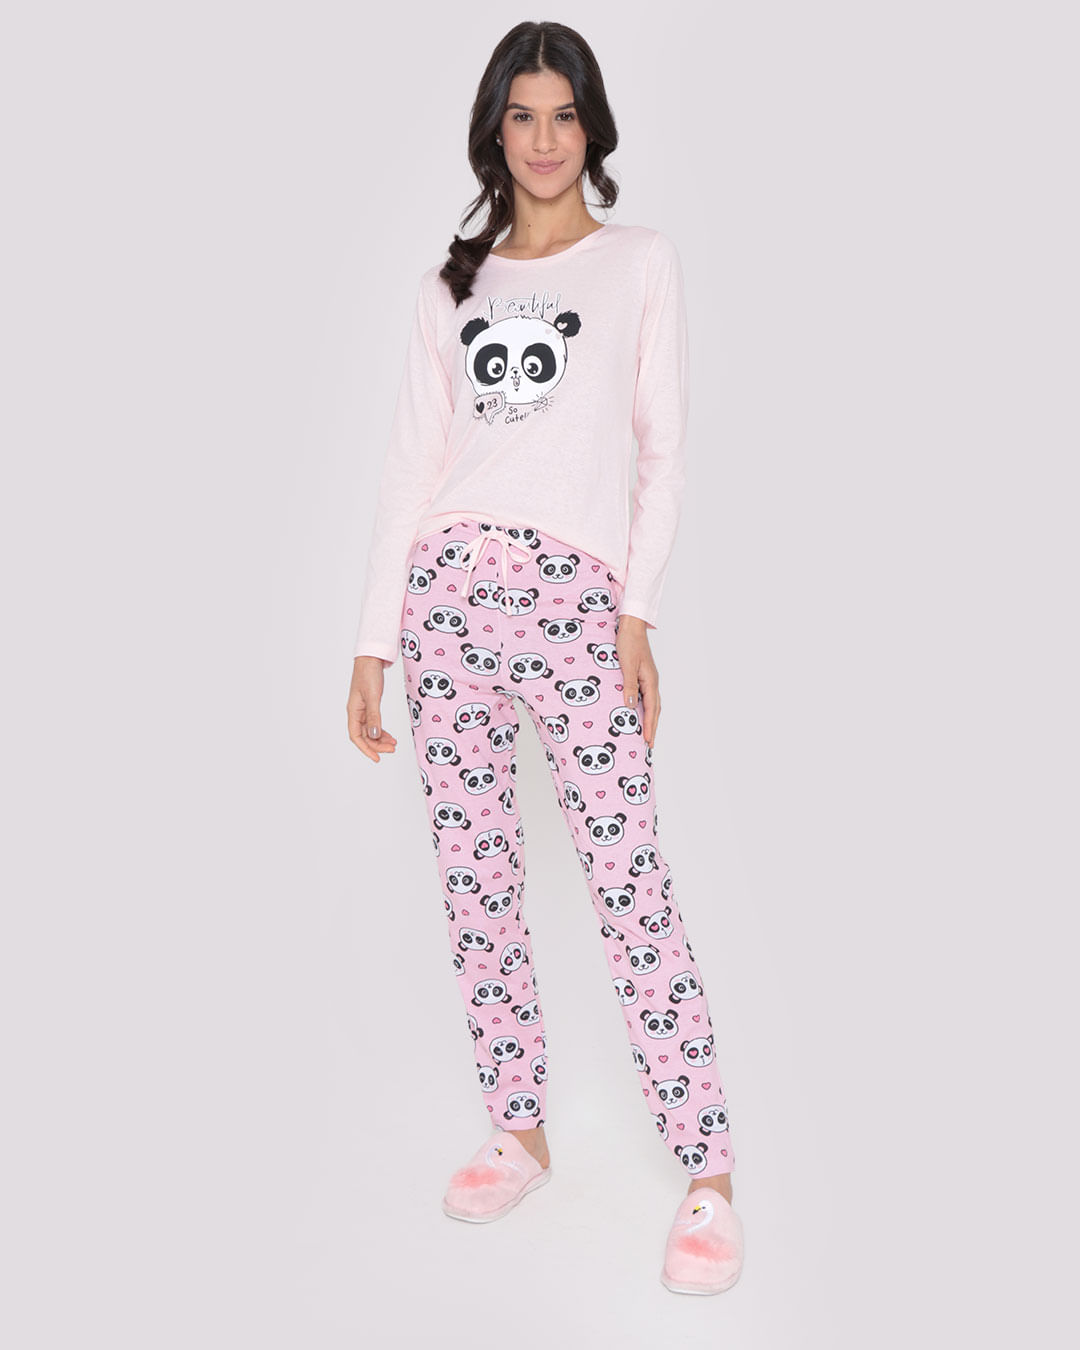 Pijama-Feminino-Longo-Estampa-Panda-Rosa